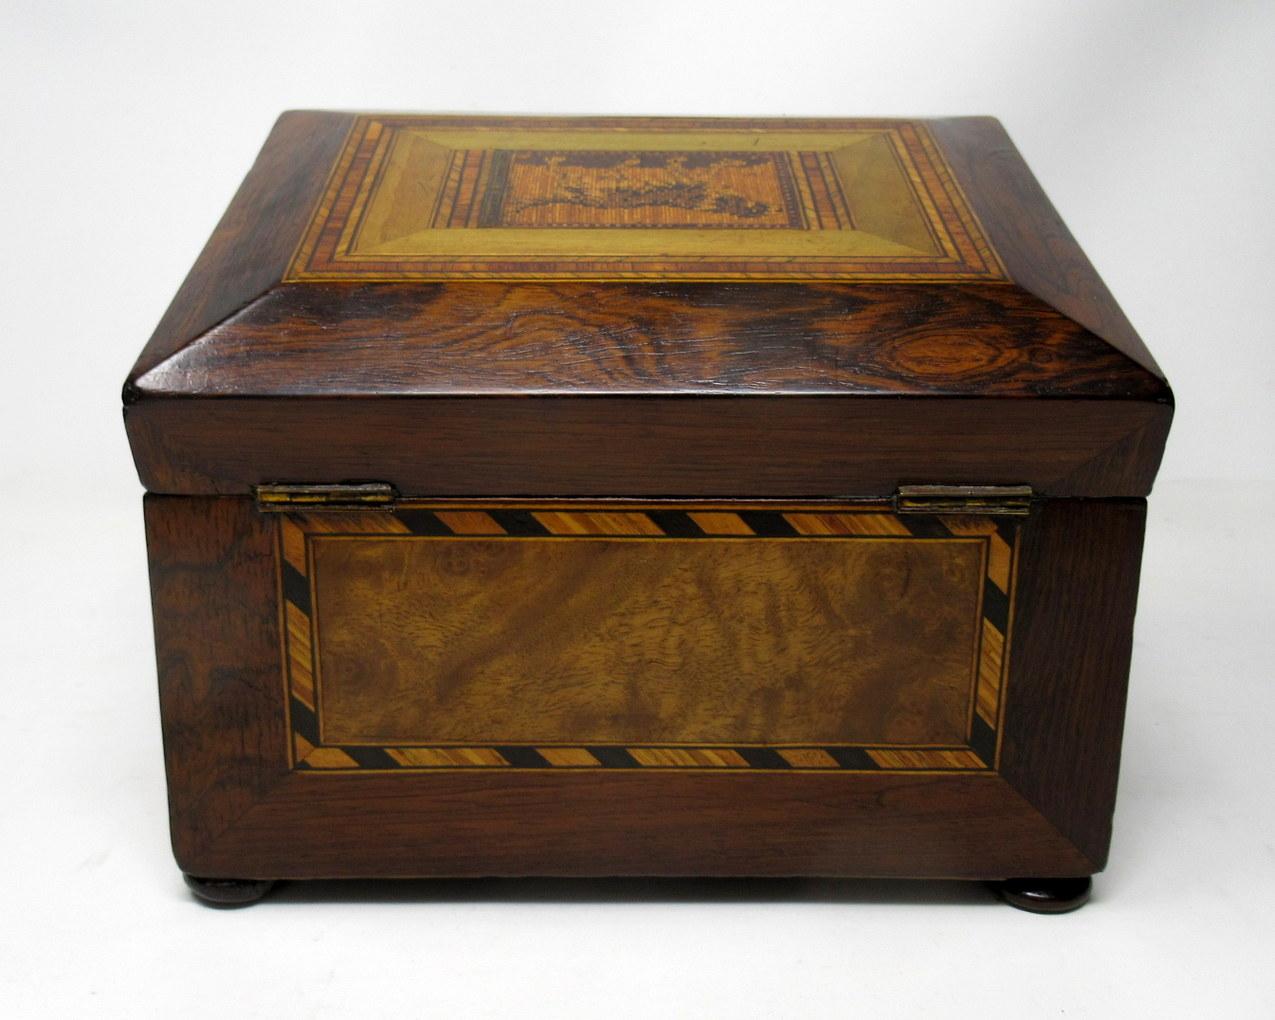 Polished Antique Victorian Mahogany Tunbridge Ware Double Tea Caddy Box, 19th Century